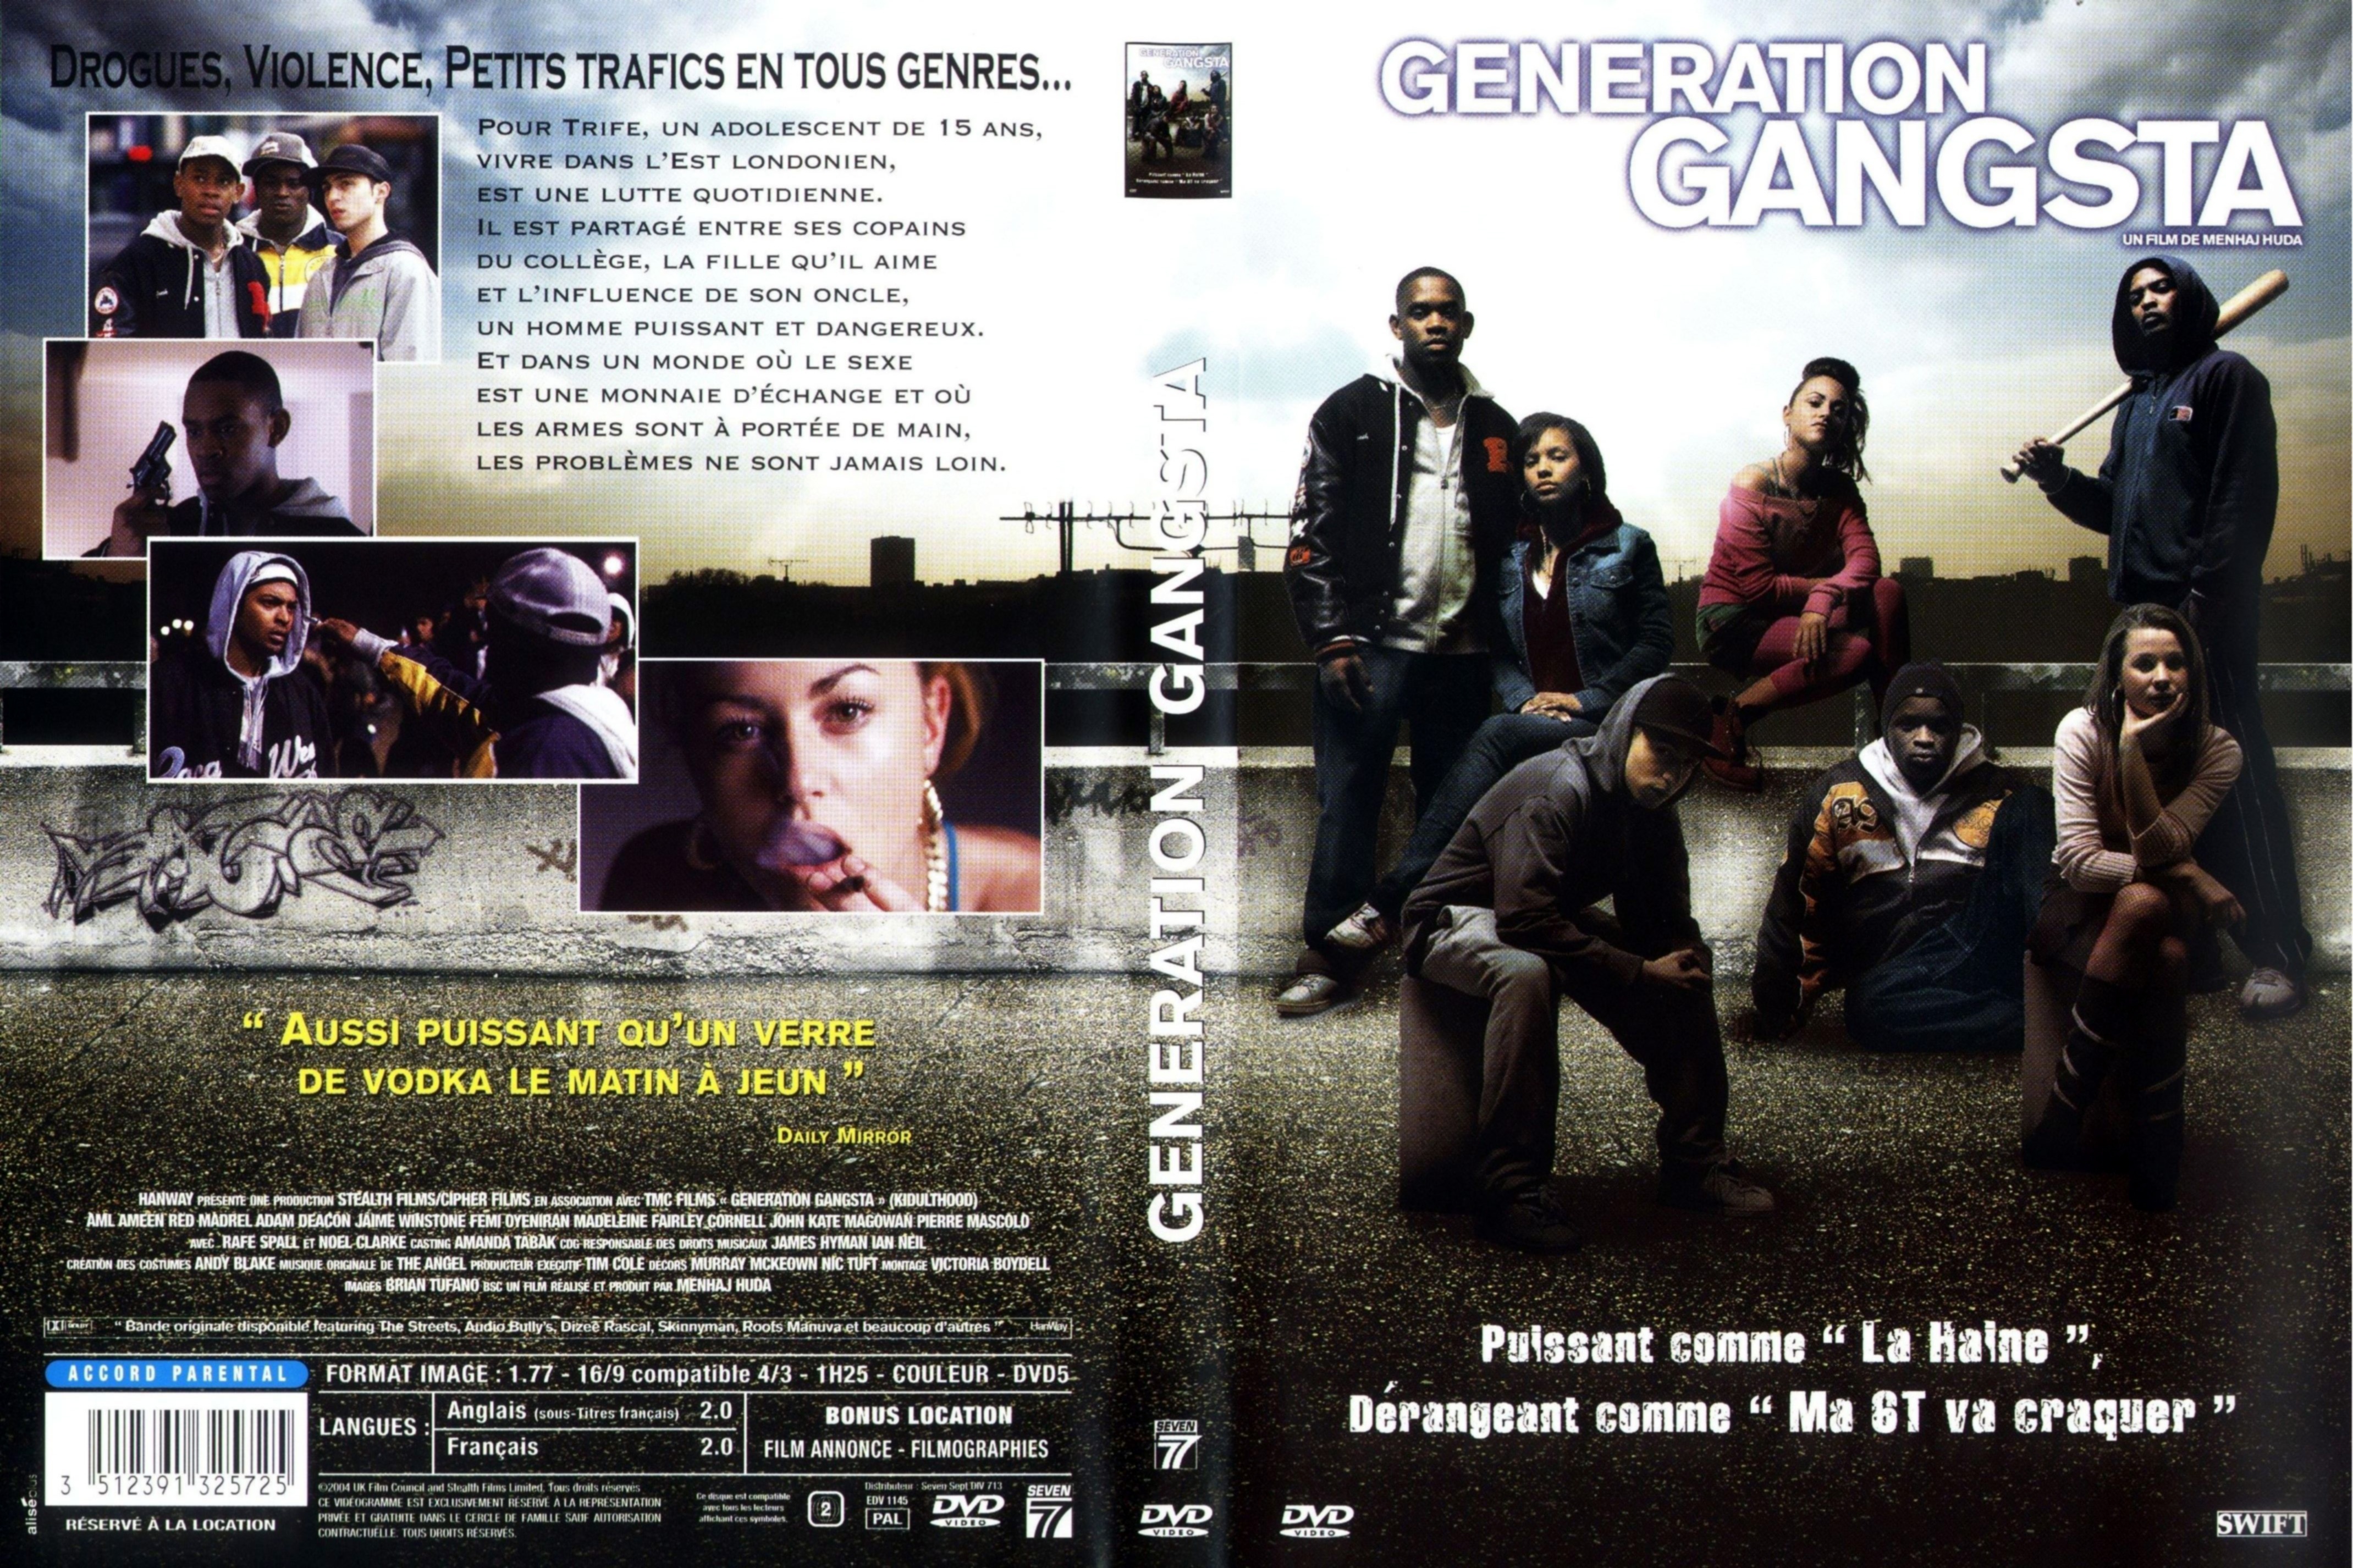 Jaquette DVD Generation gangsta